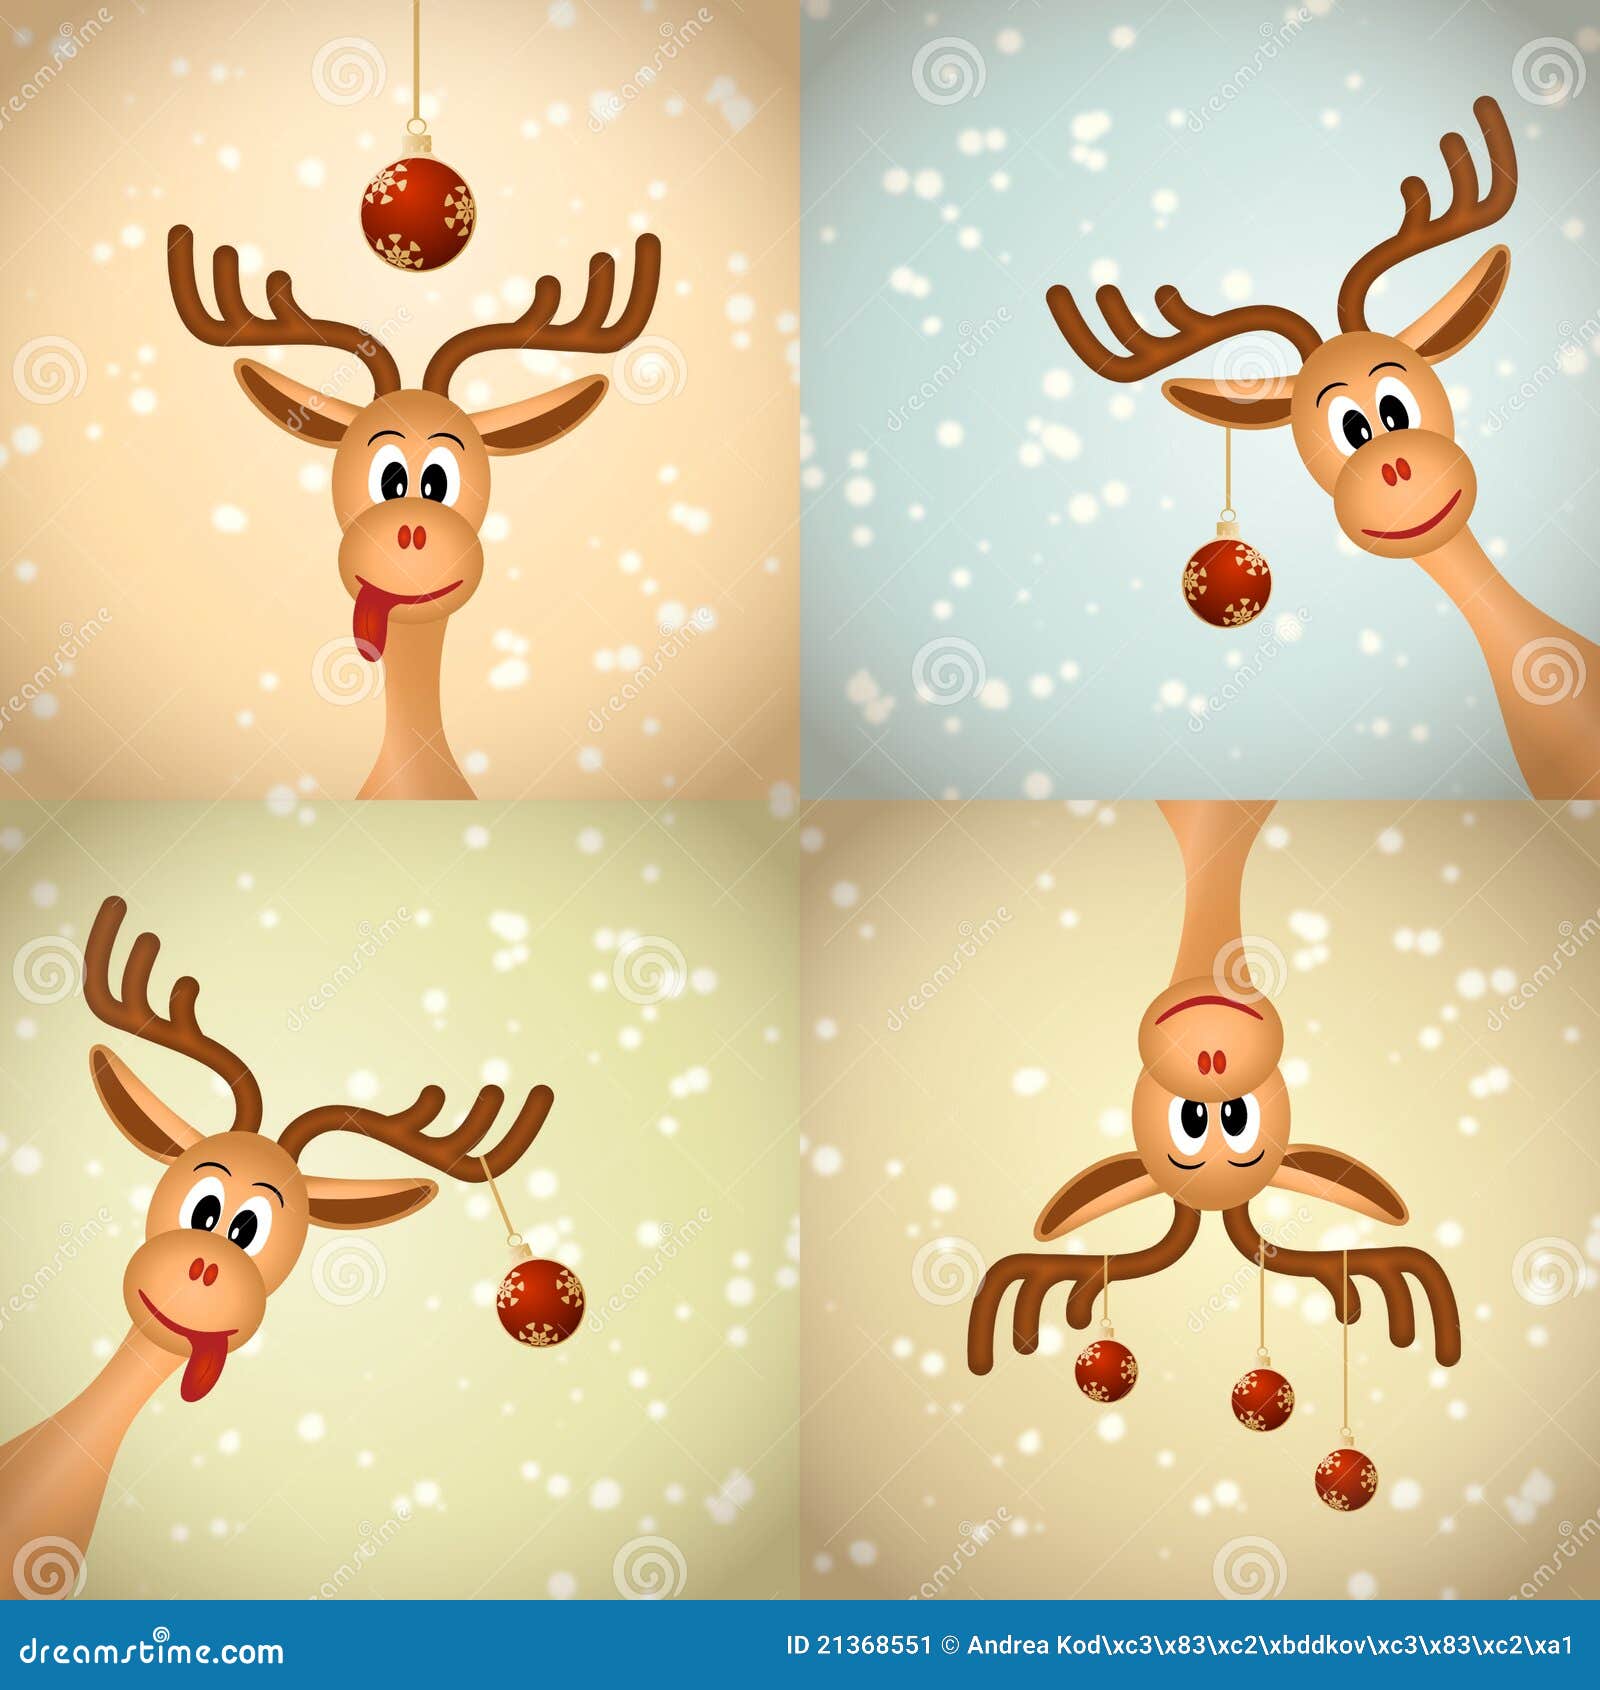 http://thumbs.dreamstime.com/z/four-funny-christmas-reindeer-21368551.jpg